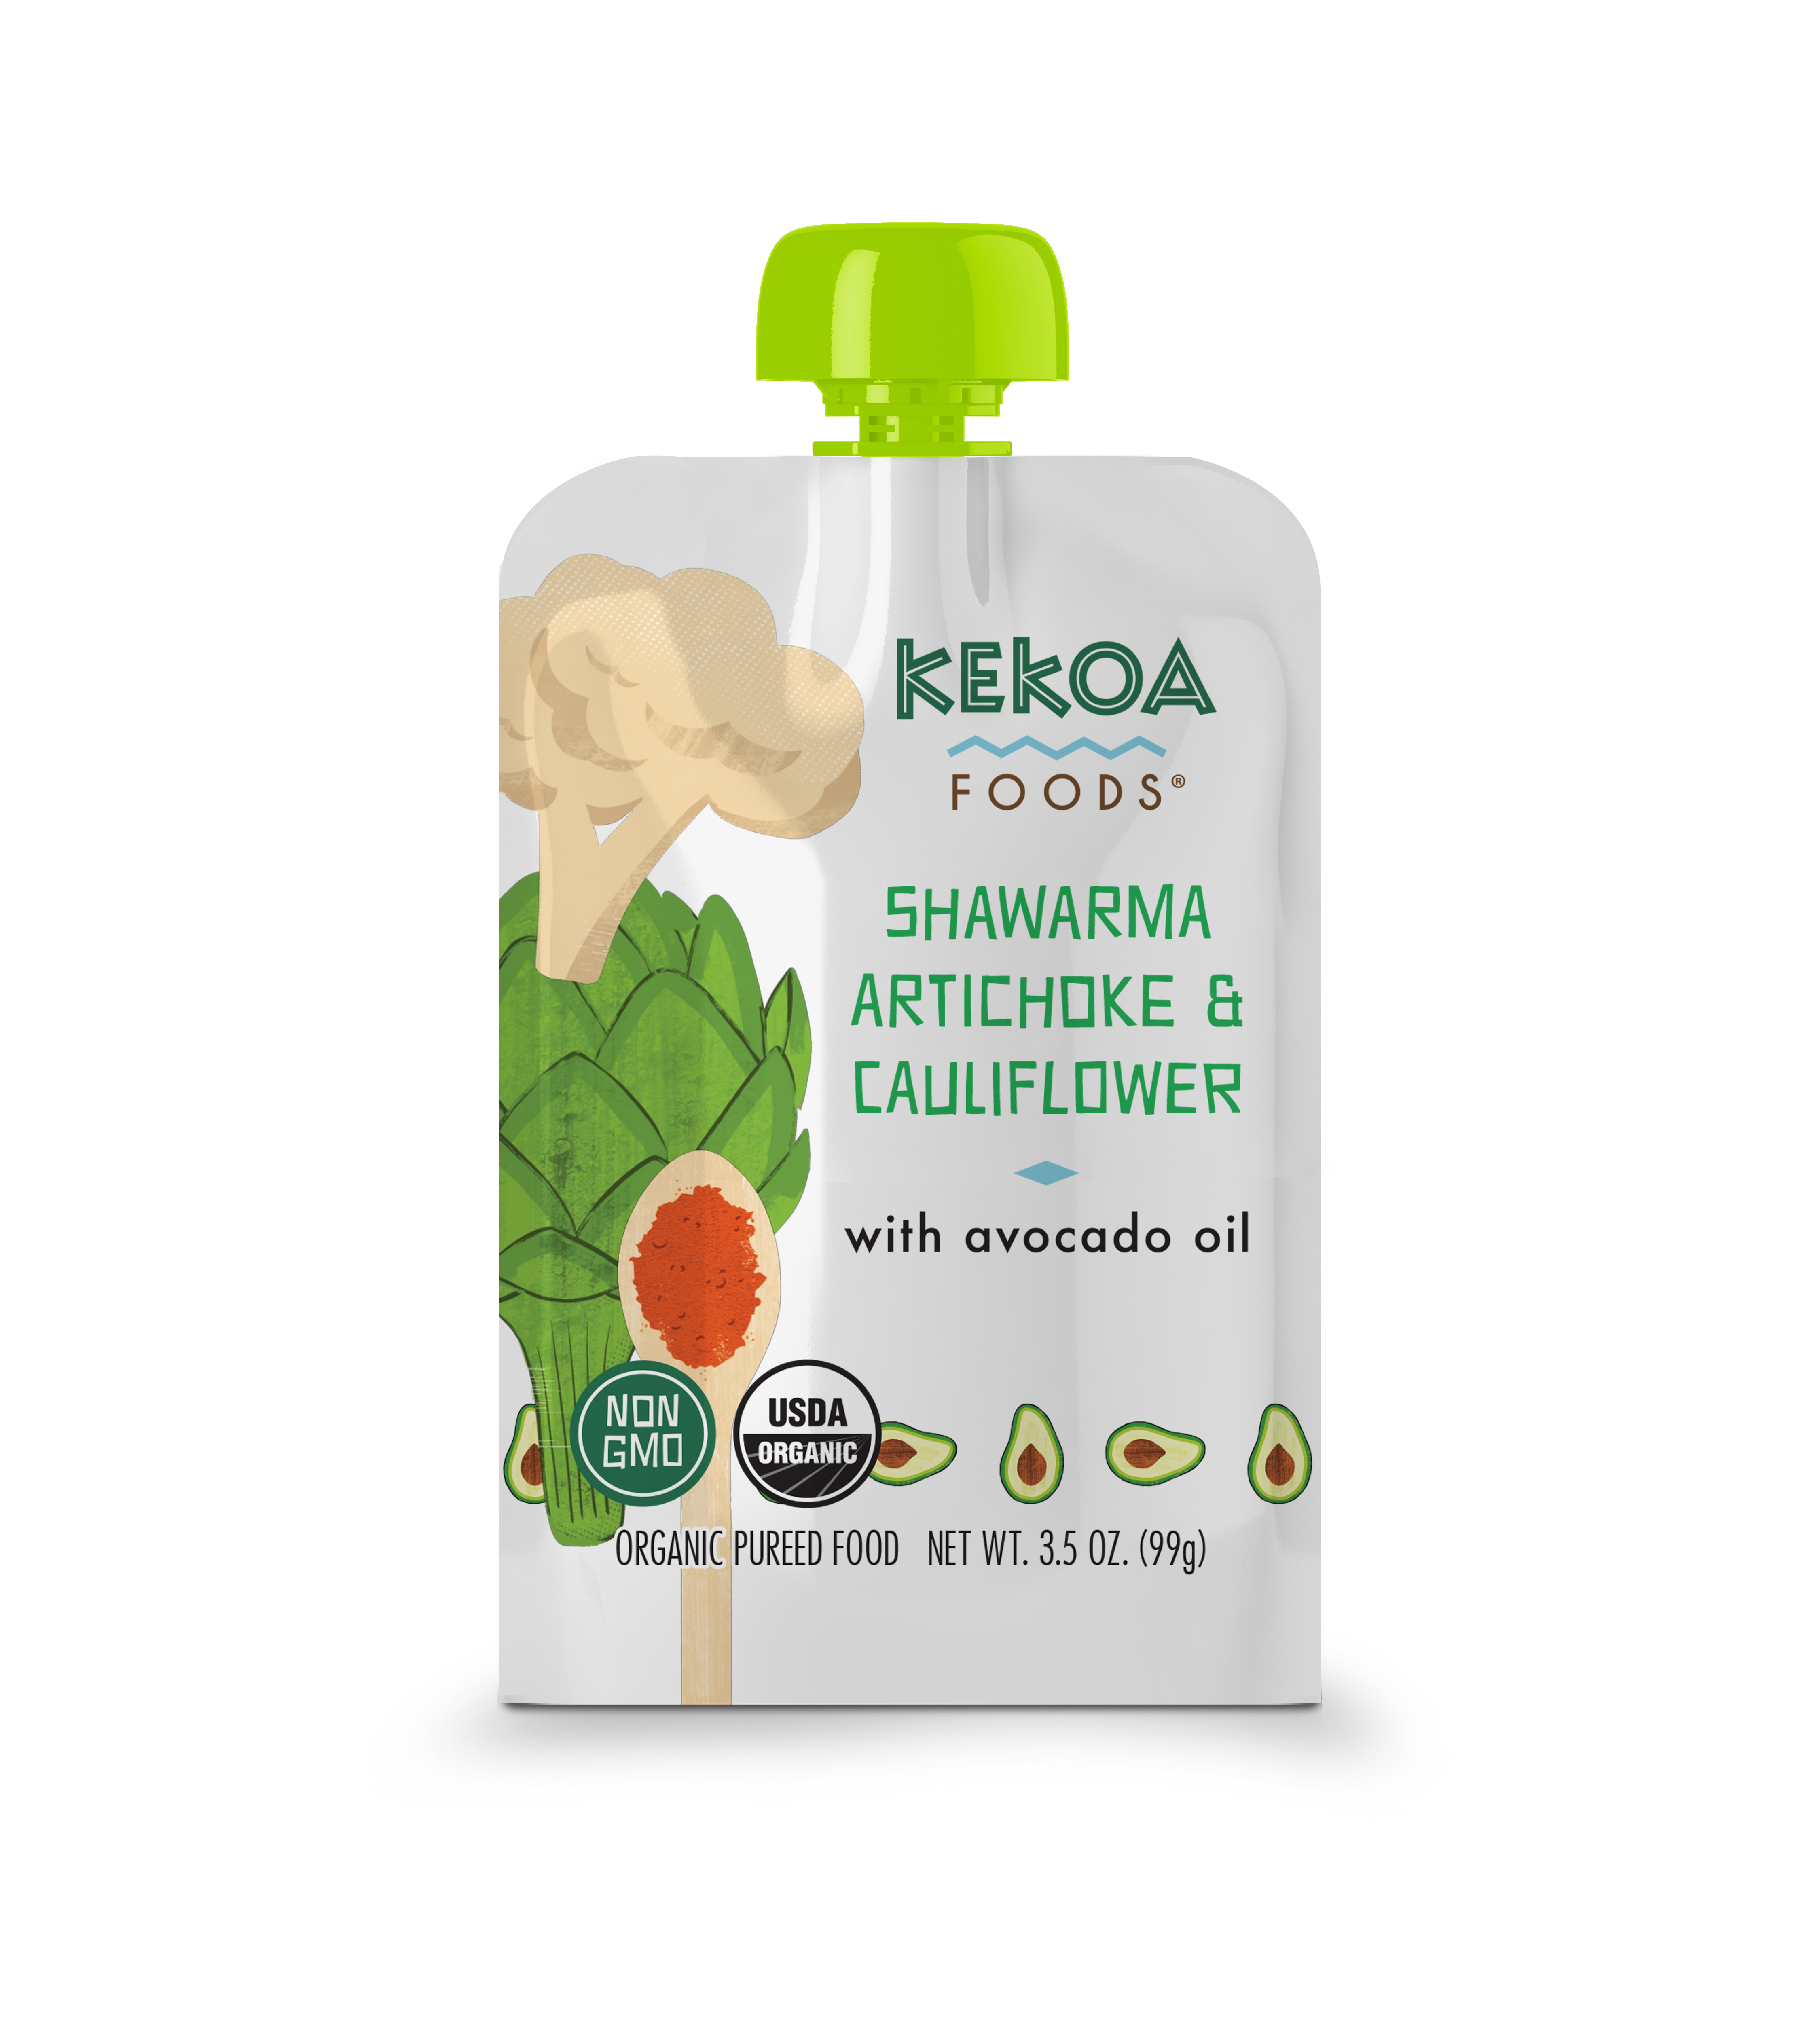 Kekoa Foods - Shawarma Artichoke and Cauliflower 6 innerpacks per case 3.5 oz